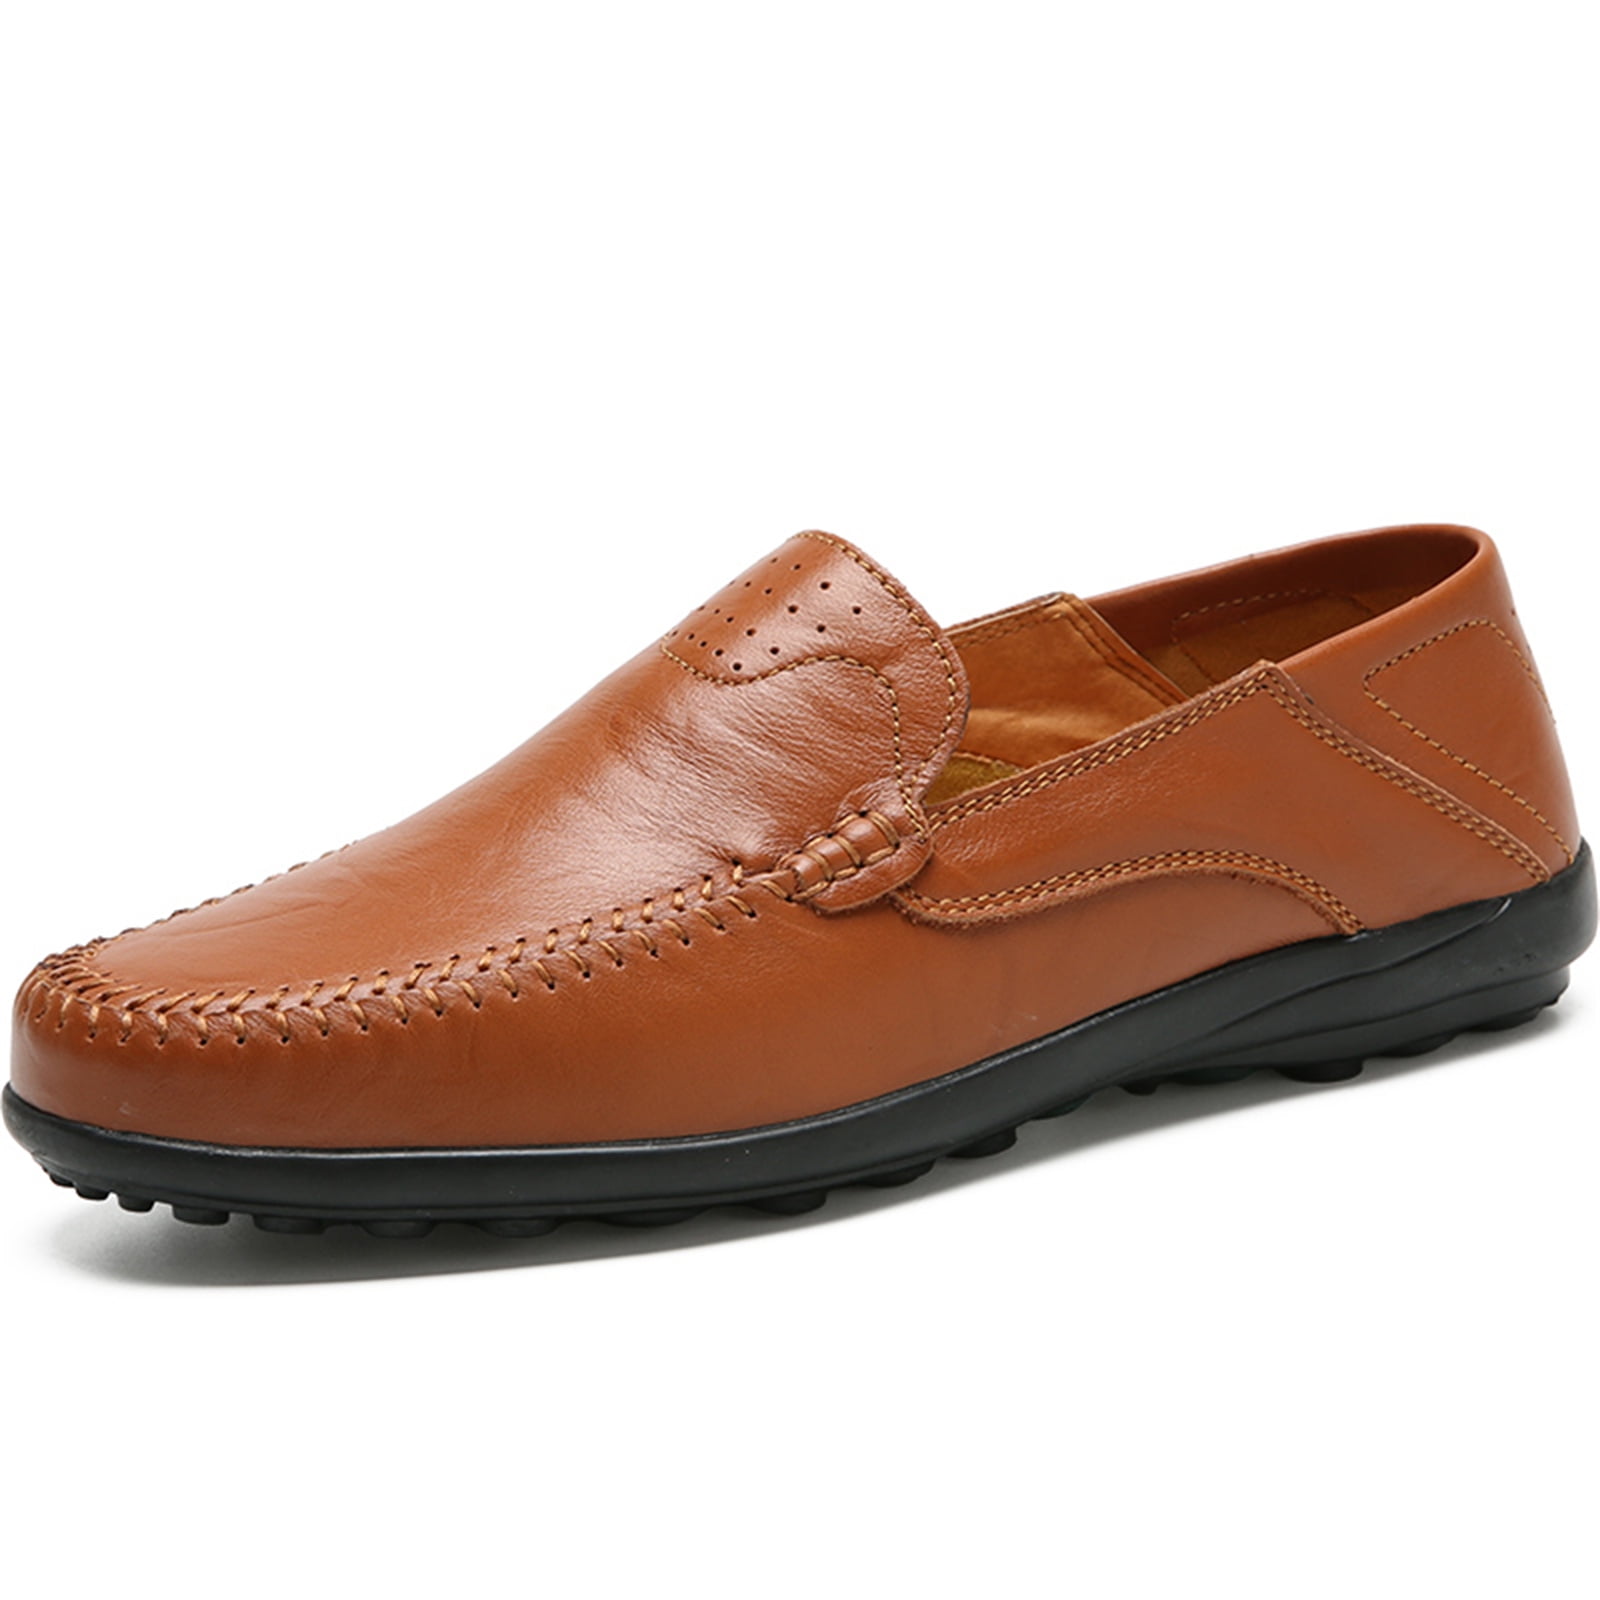 GHFKKB Men's Casual Leather Loafers Slip On Loafer Shoes - Walmart.com